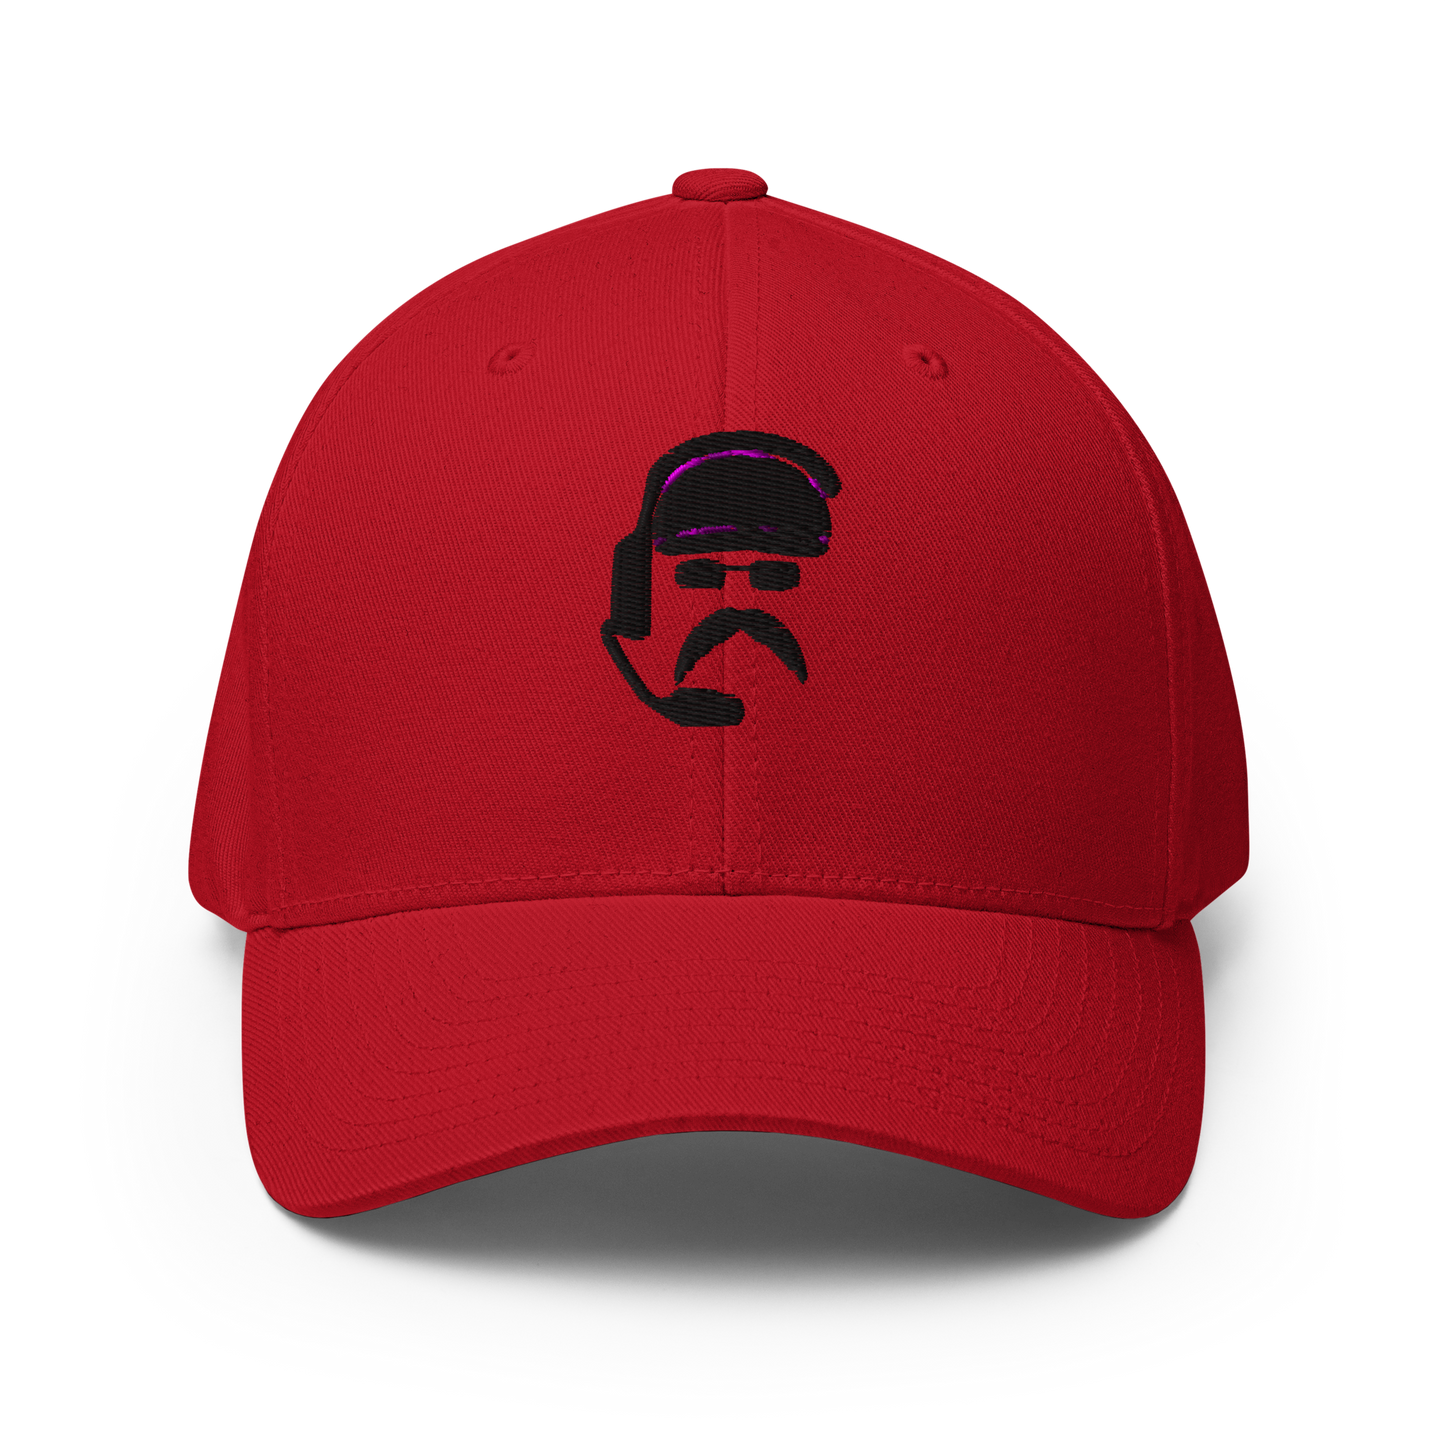 Andy Reid’s Hat / Kansas City Hat / Kansas City Chiefs Cap